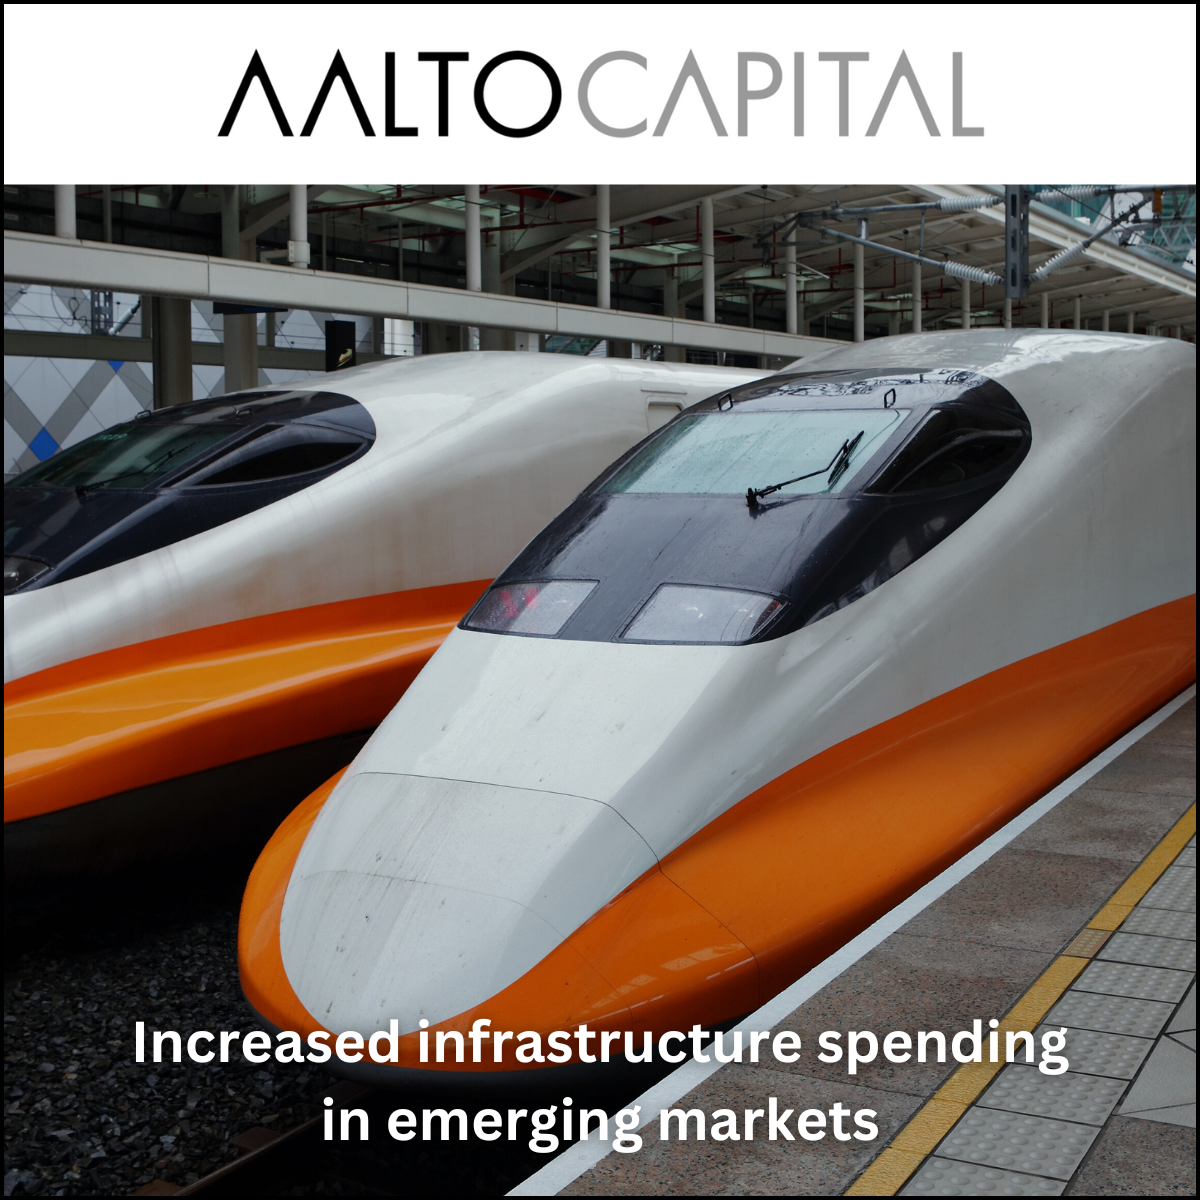 Increased infrastructure spending in emerging markets